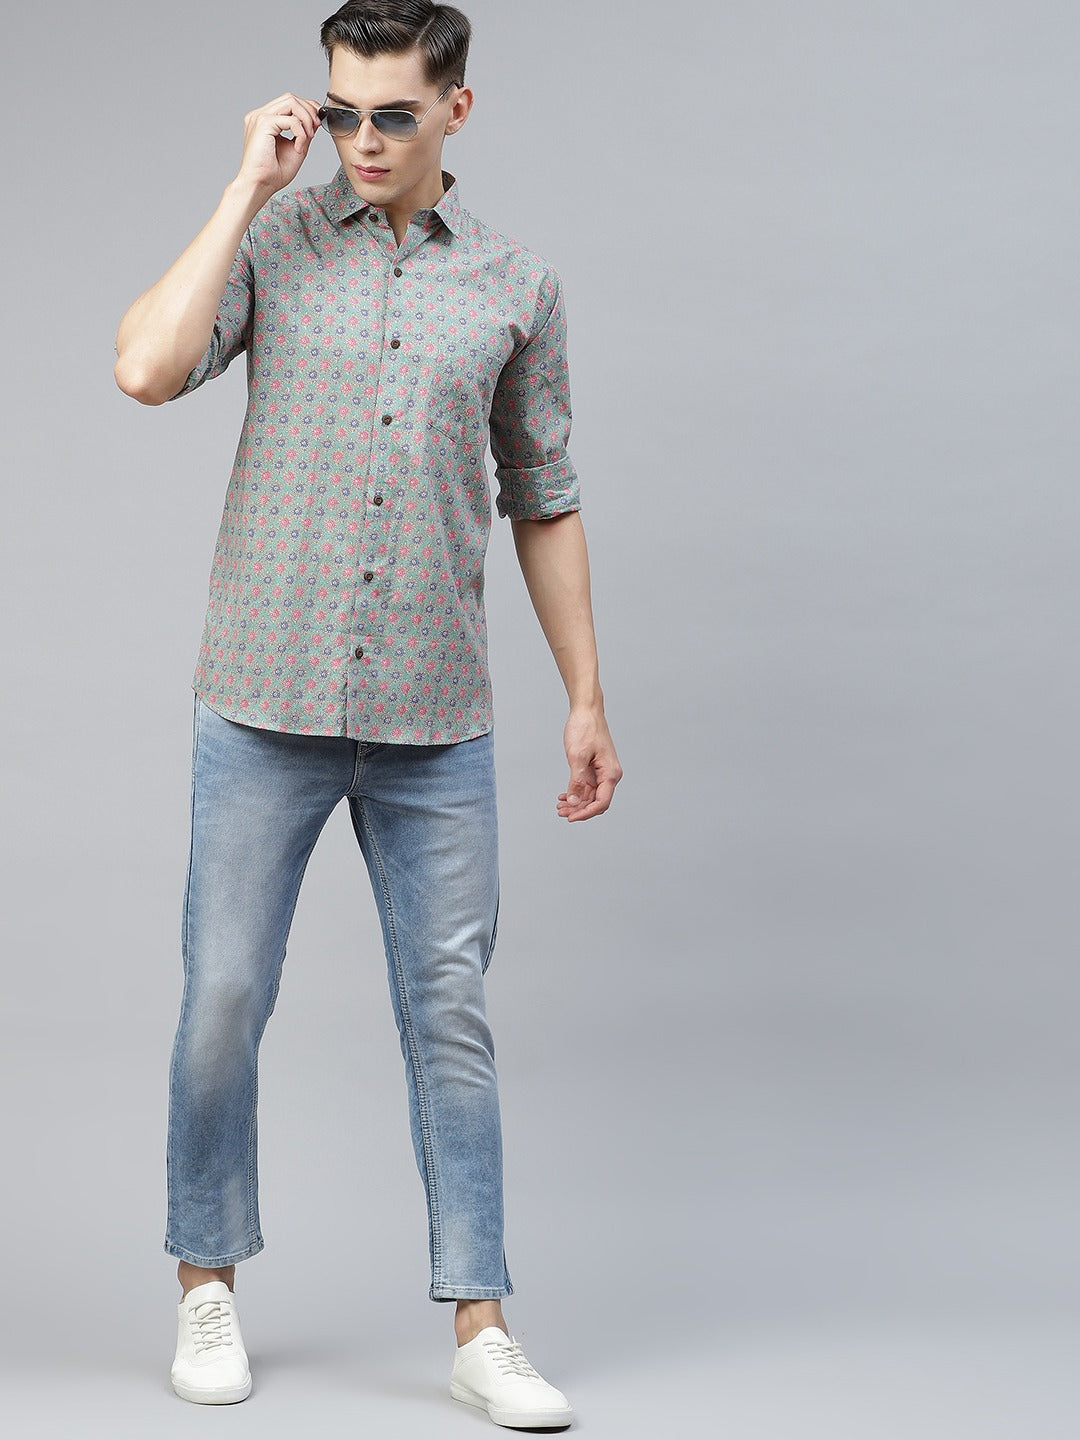 Millennial Men Green Comfort Floral Opaque Printed Casual Shirt